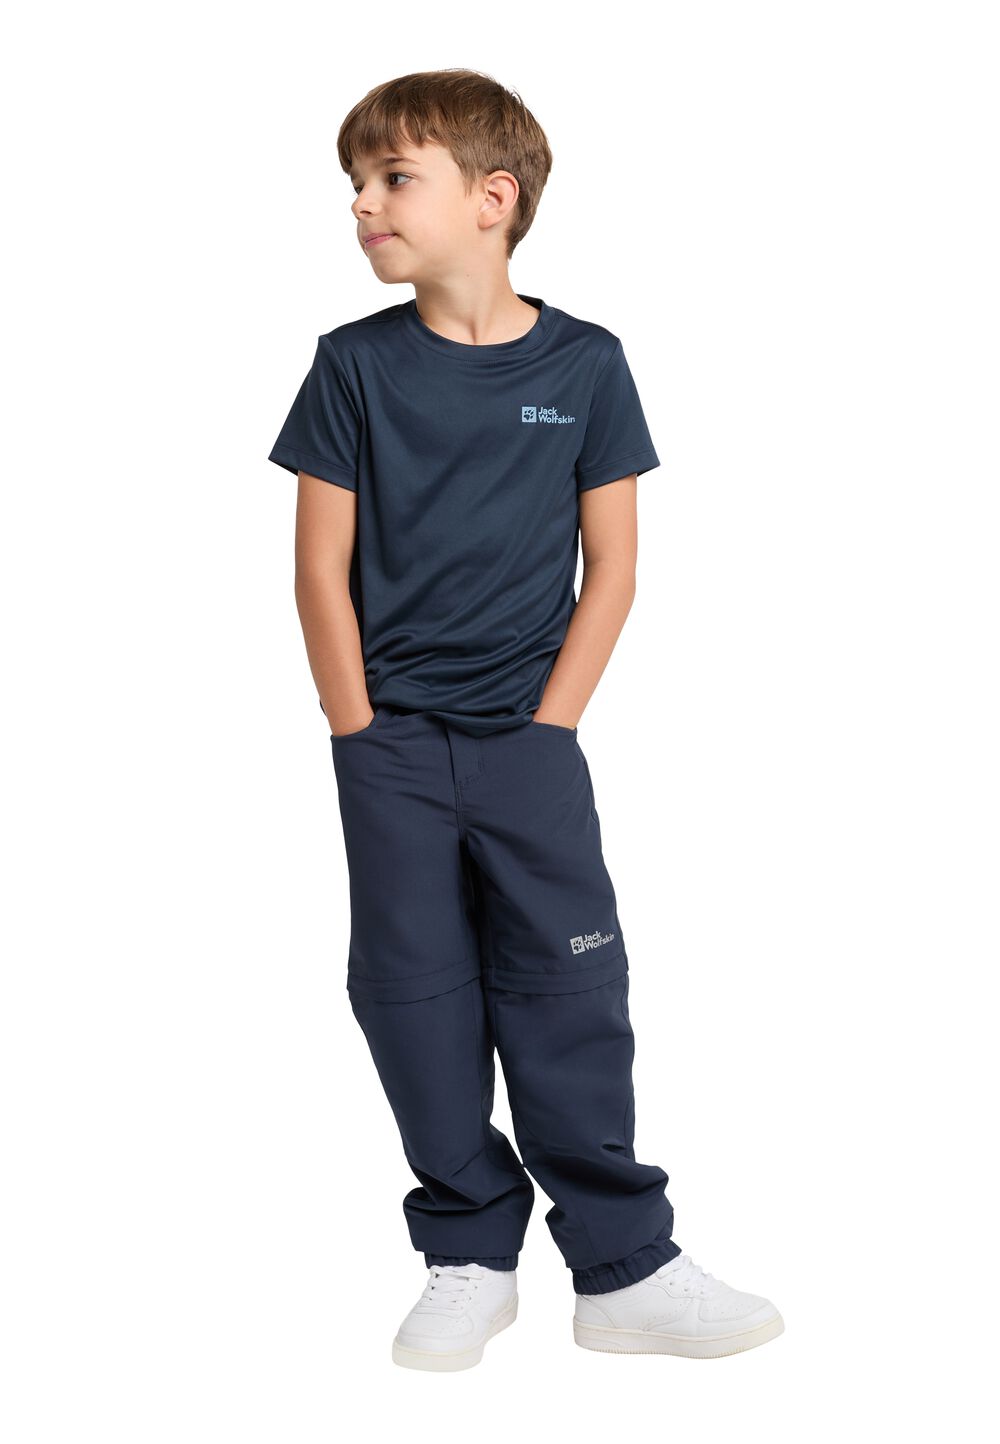 Jack Wolfskin Active Solid T-Shirt Kids Functioneel shirt Kinderen 164 blue night blue